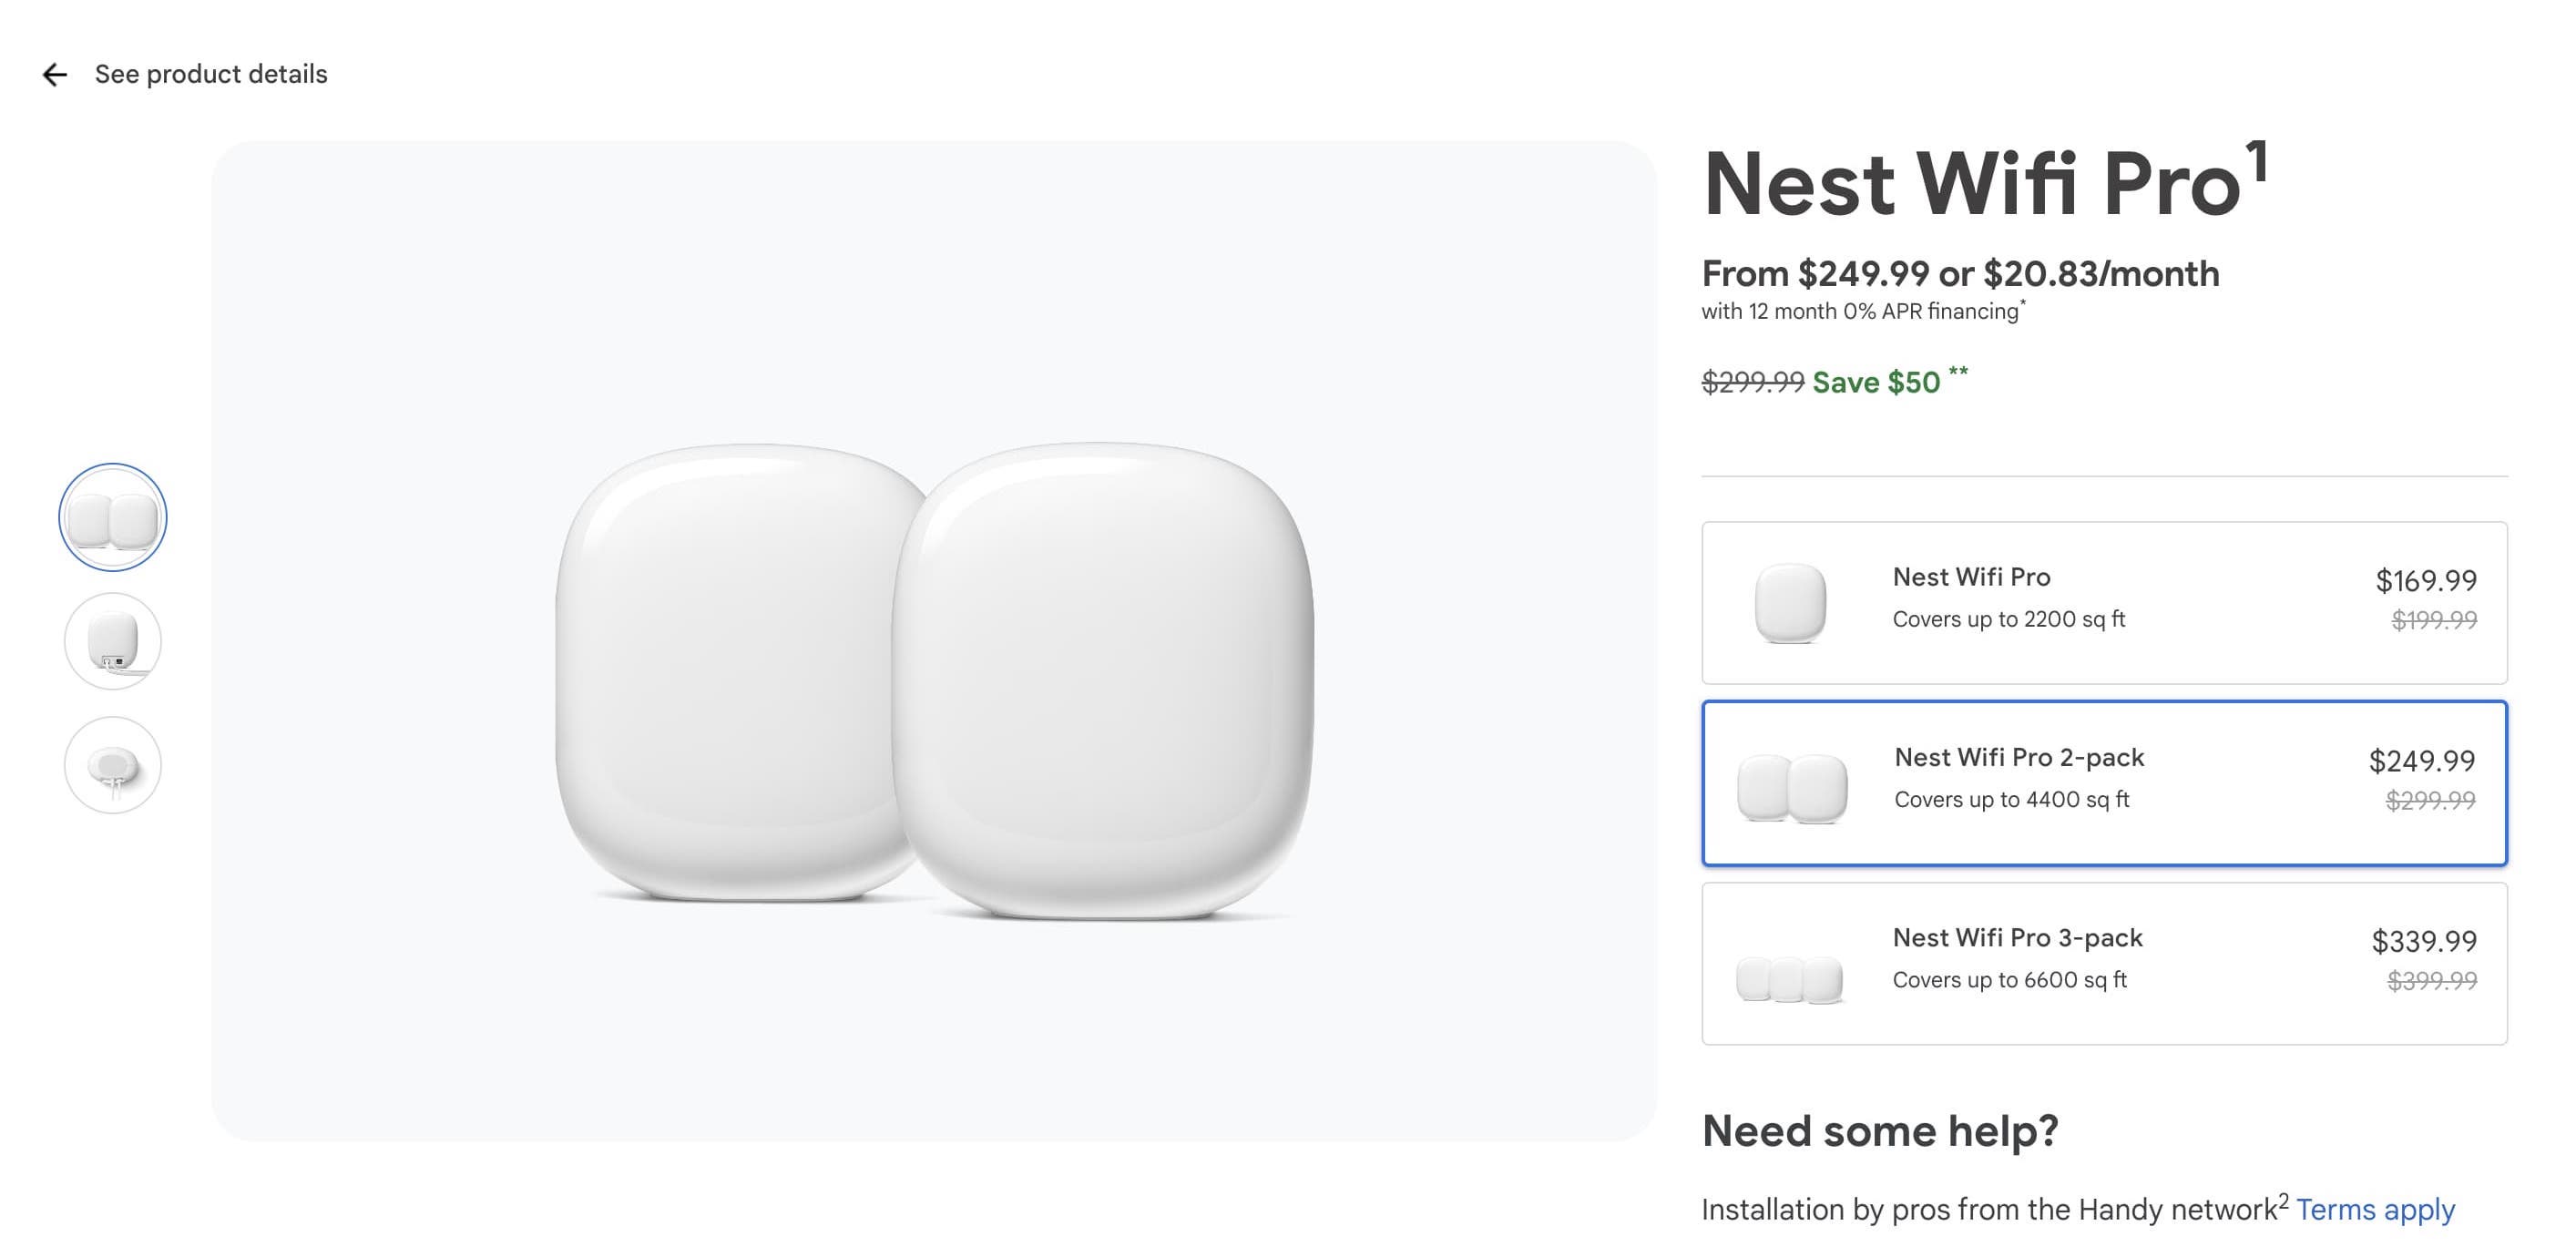 Nest Wifi Pro discount